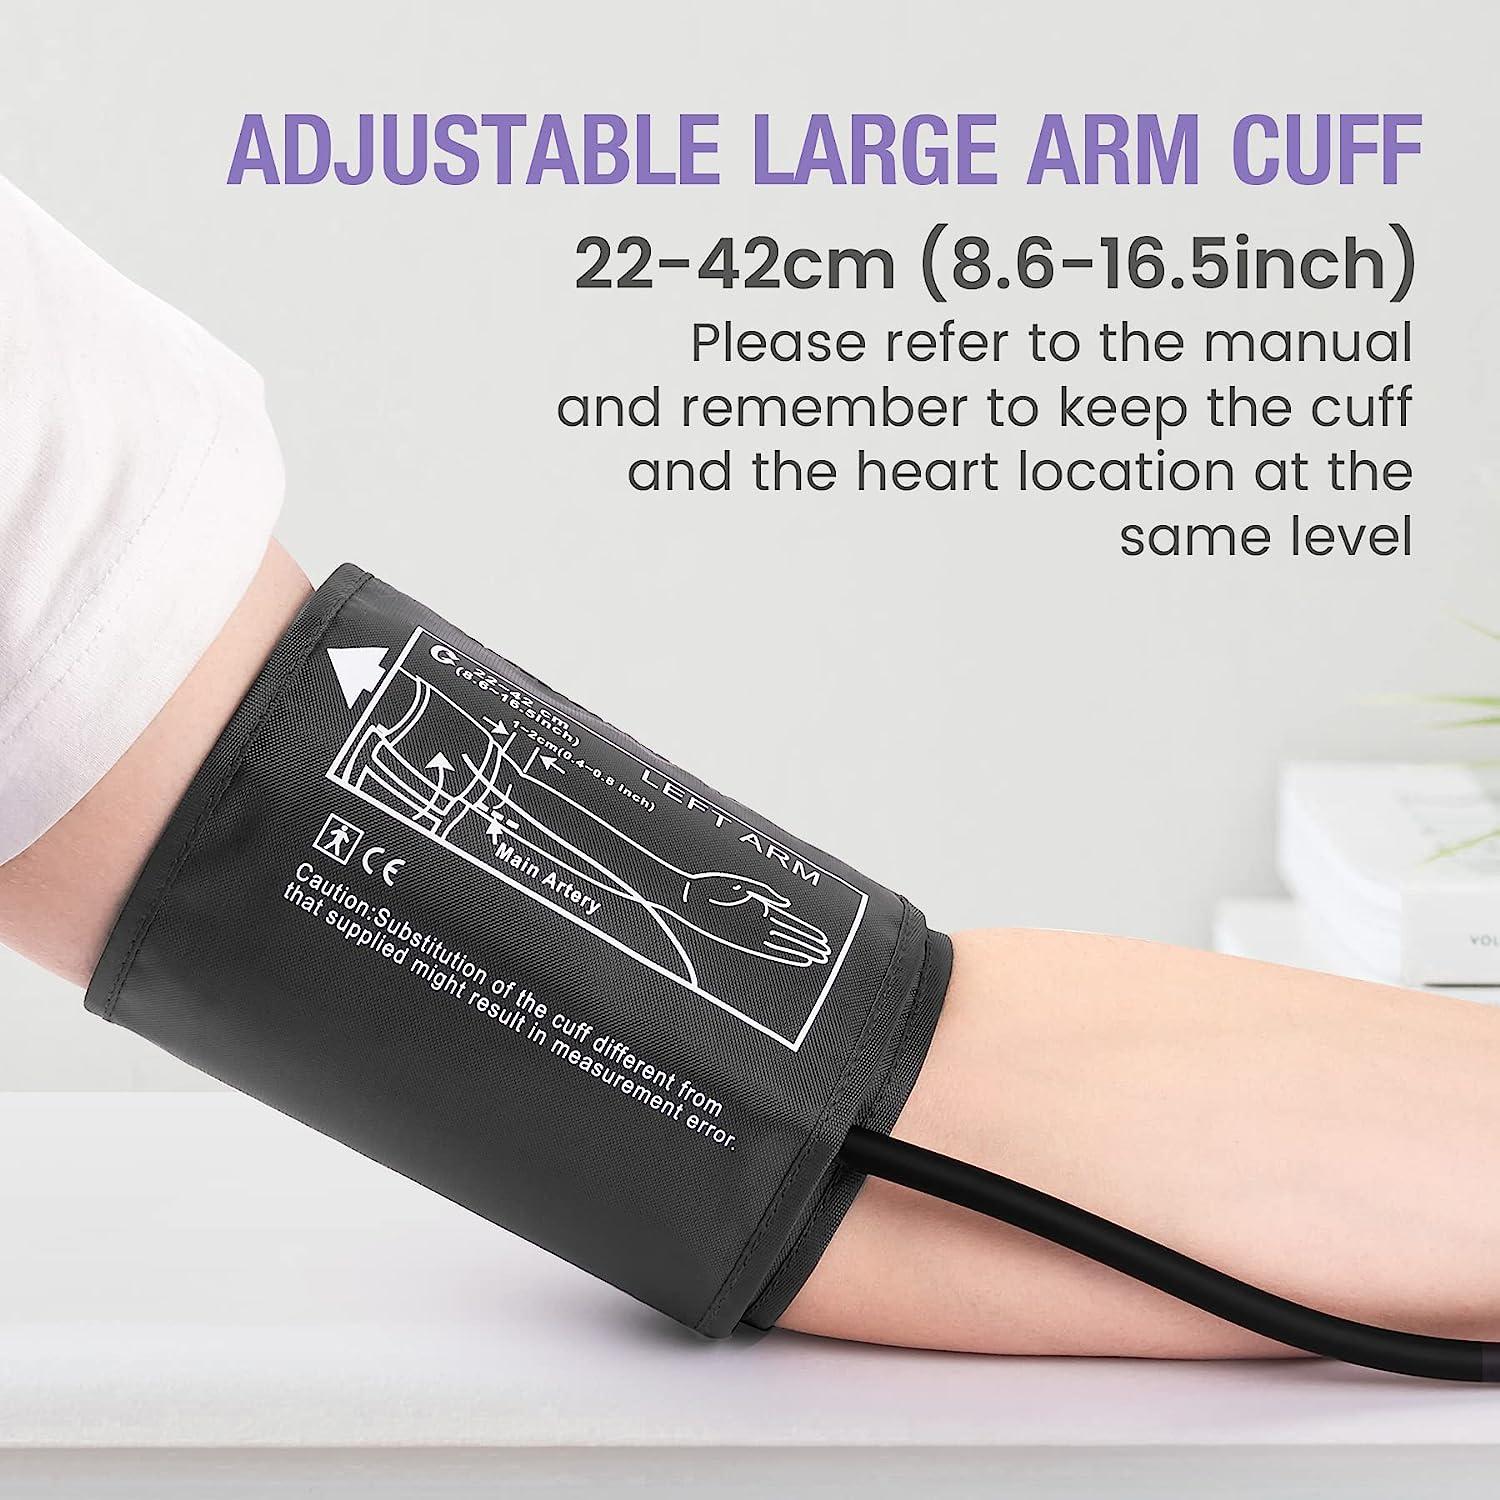 Sejoy Blood Pressure Monitor Upper Arm, Automatic Digital BP